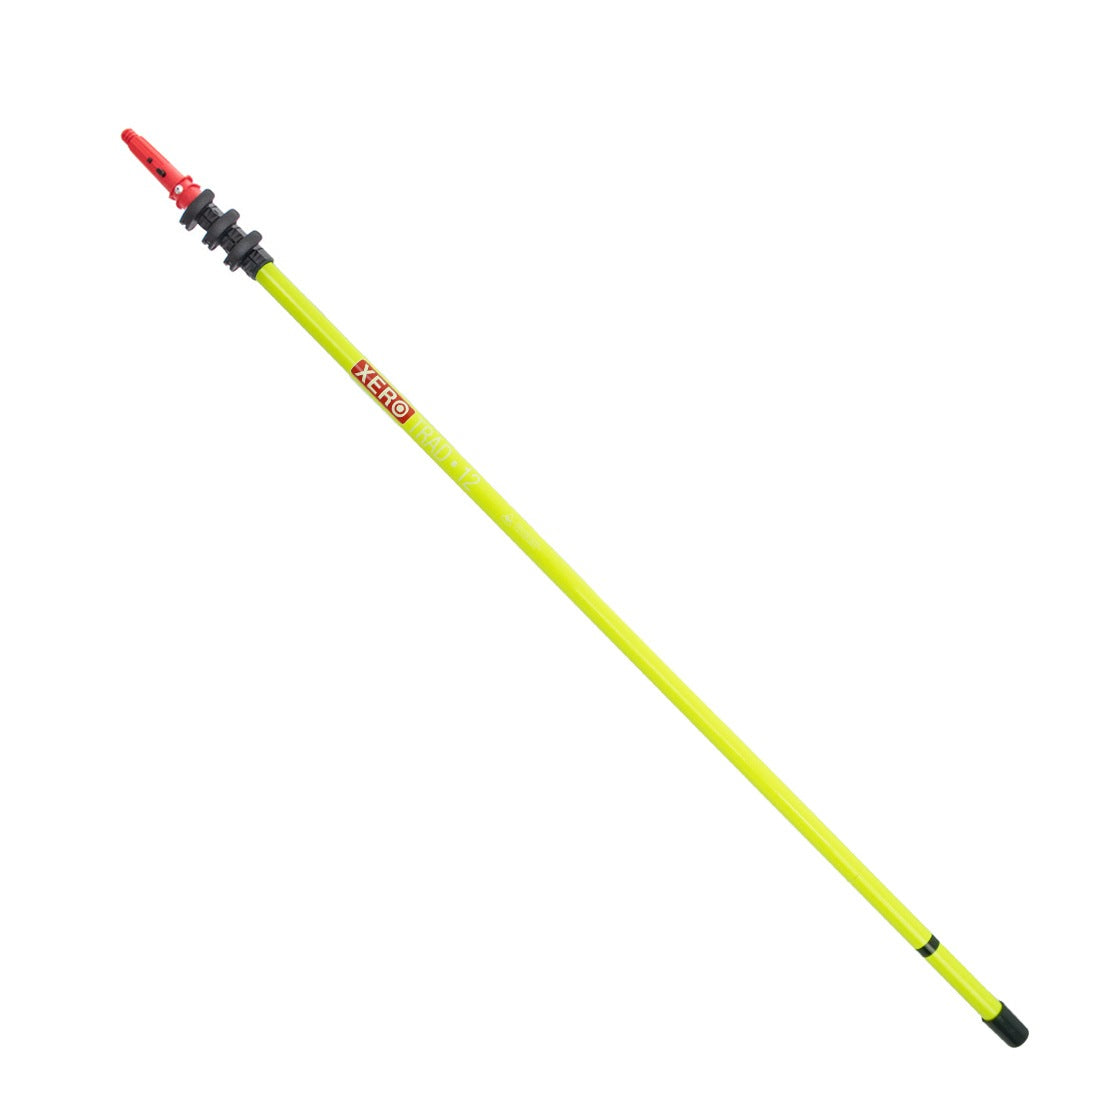 XERO Carbon Fiber Trad Pole 2.0 - Neon Yellow 12 Foot Unger View